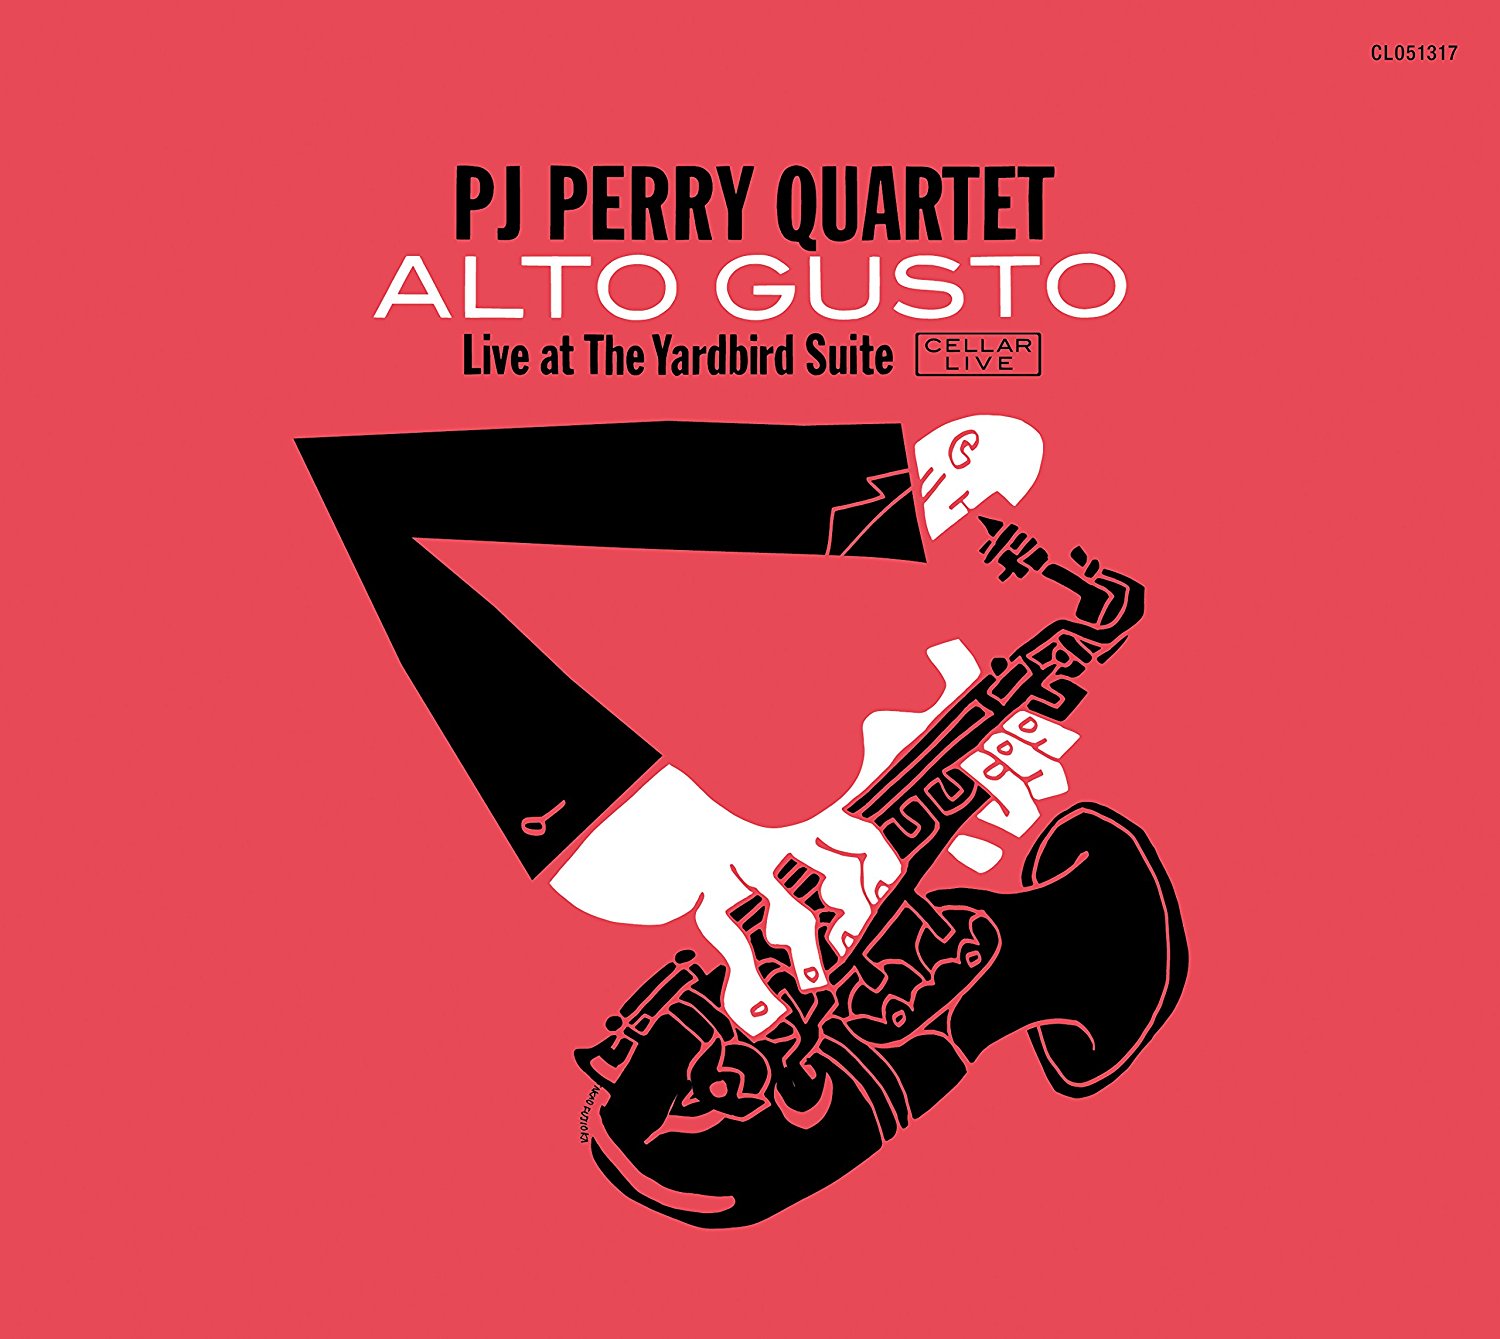 PJ Perry Quartet / Alto Gusto - Live at The Yardbird Suite